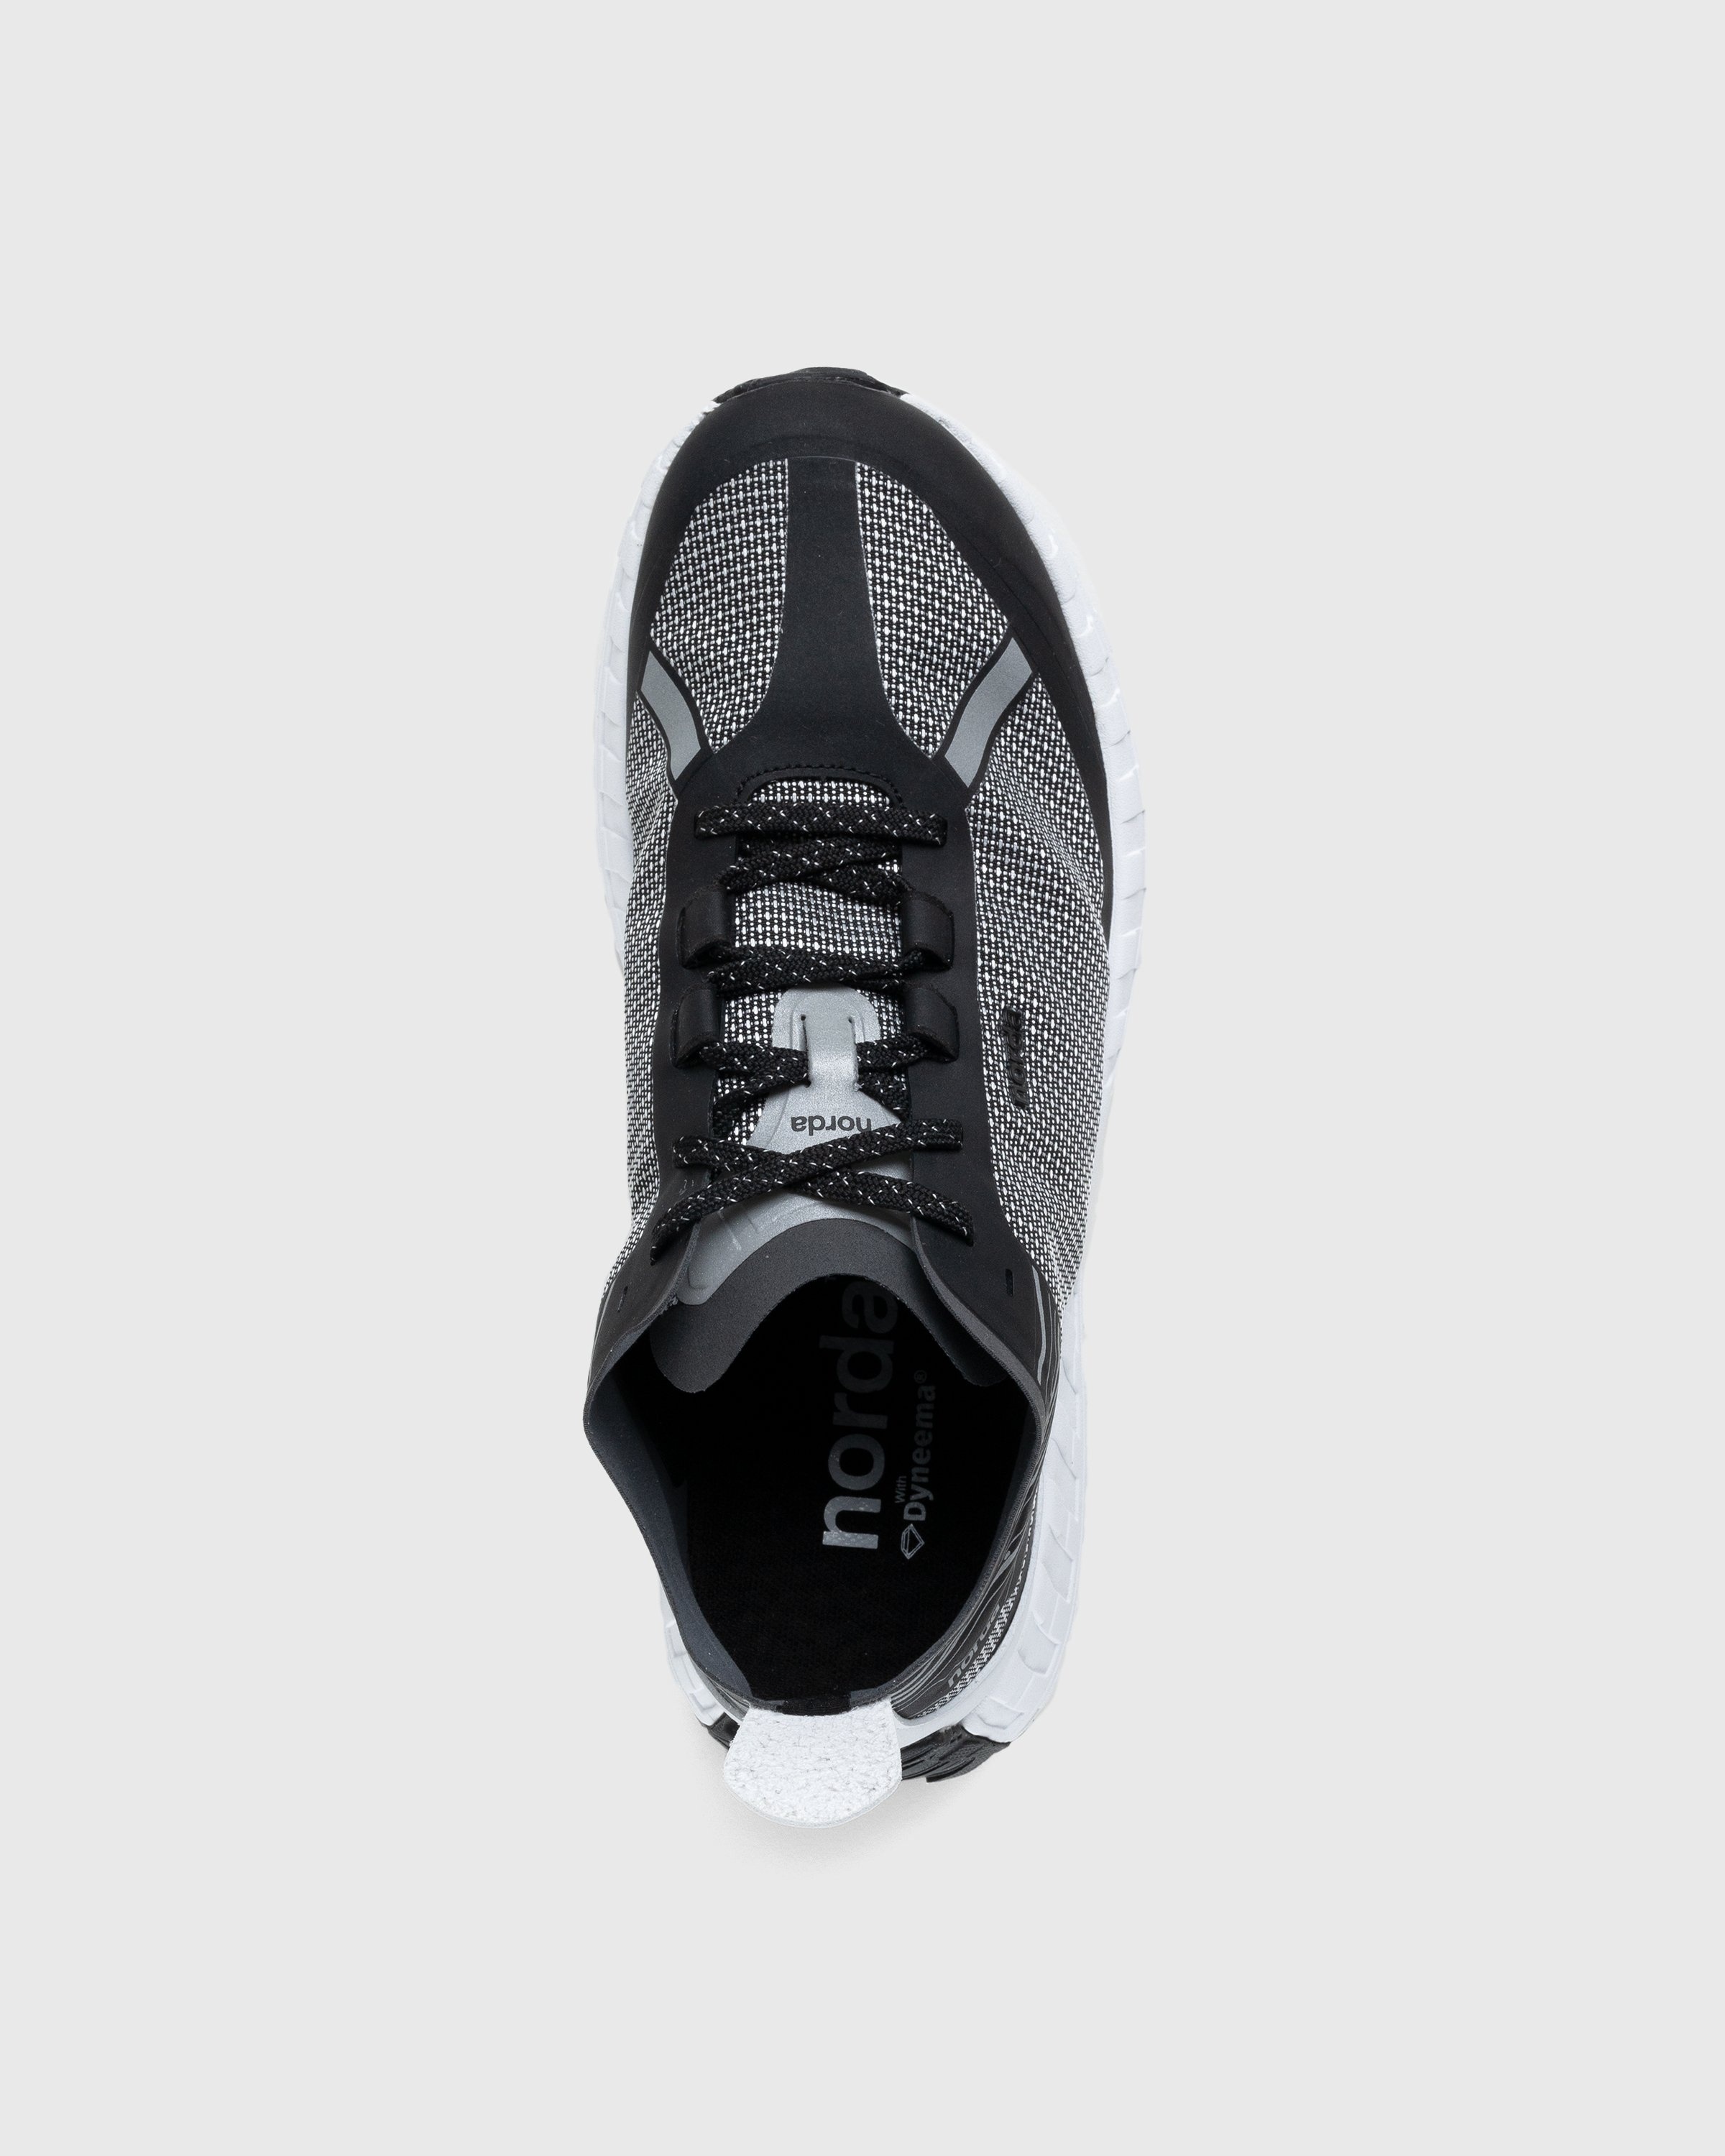 Norda – 001 M Black - Sneakers - Black - Image 5